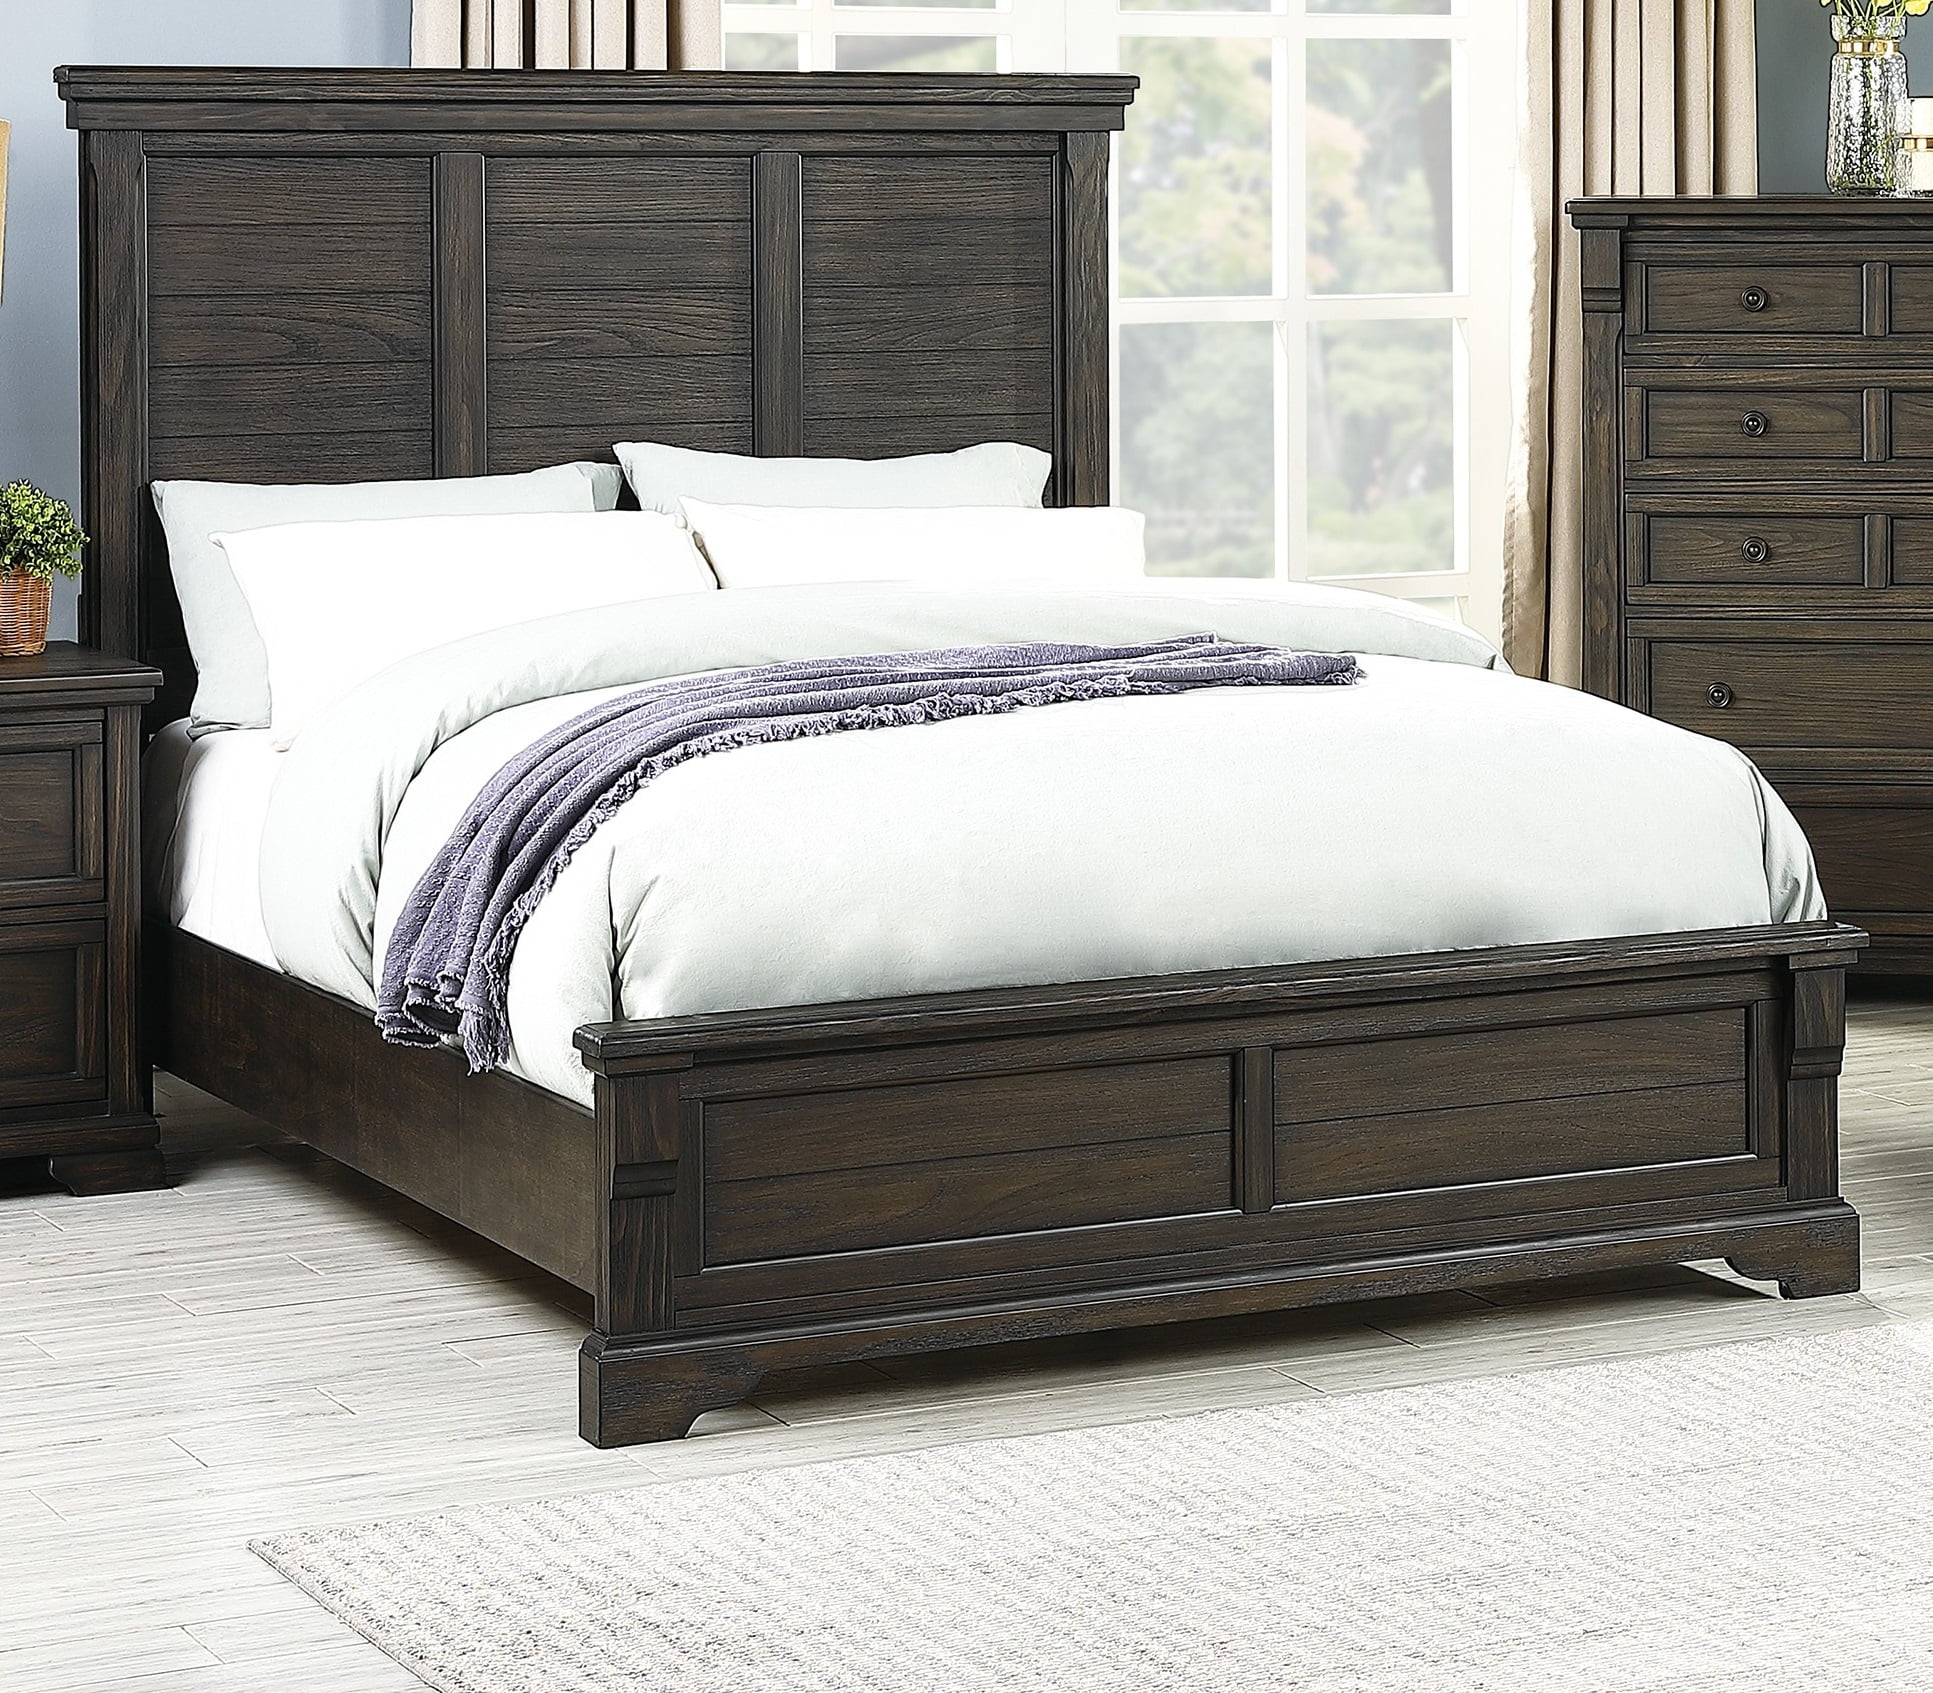 1pc Bedroom Furniture Eastern King Size, Eastern King Bed Frame Wood